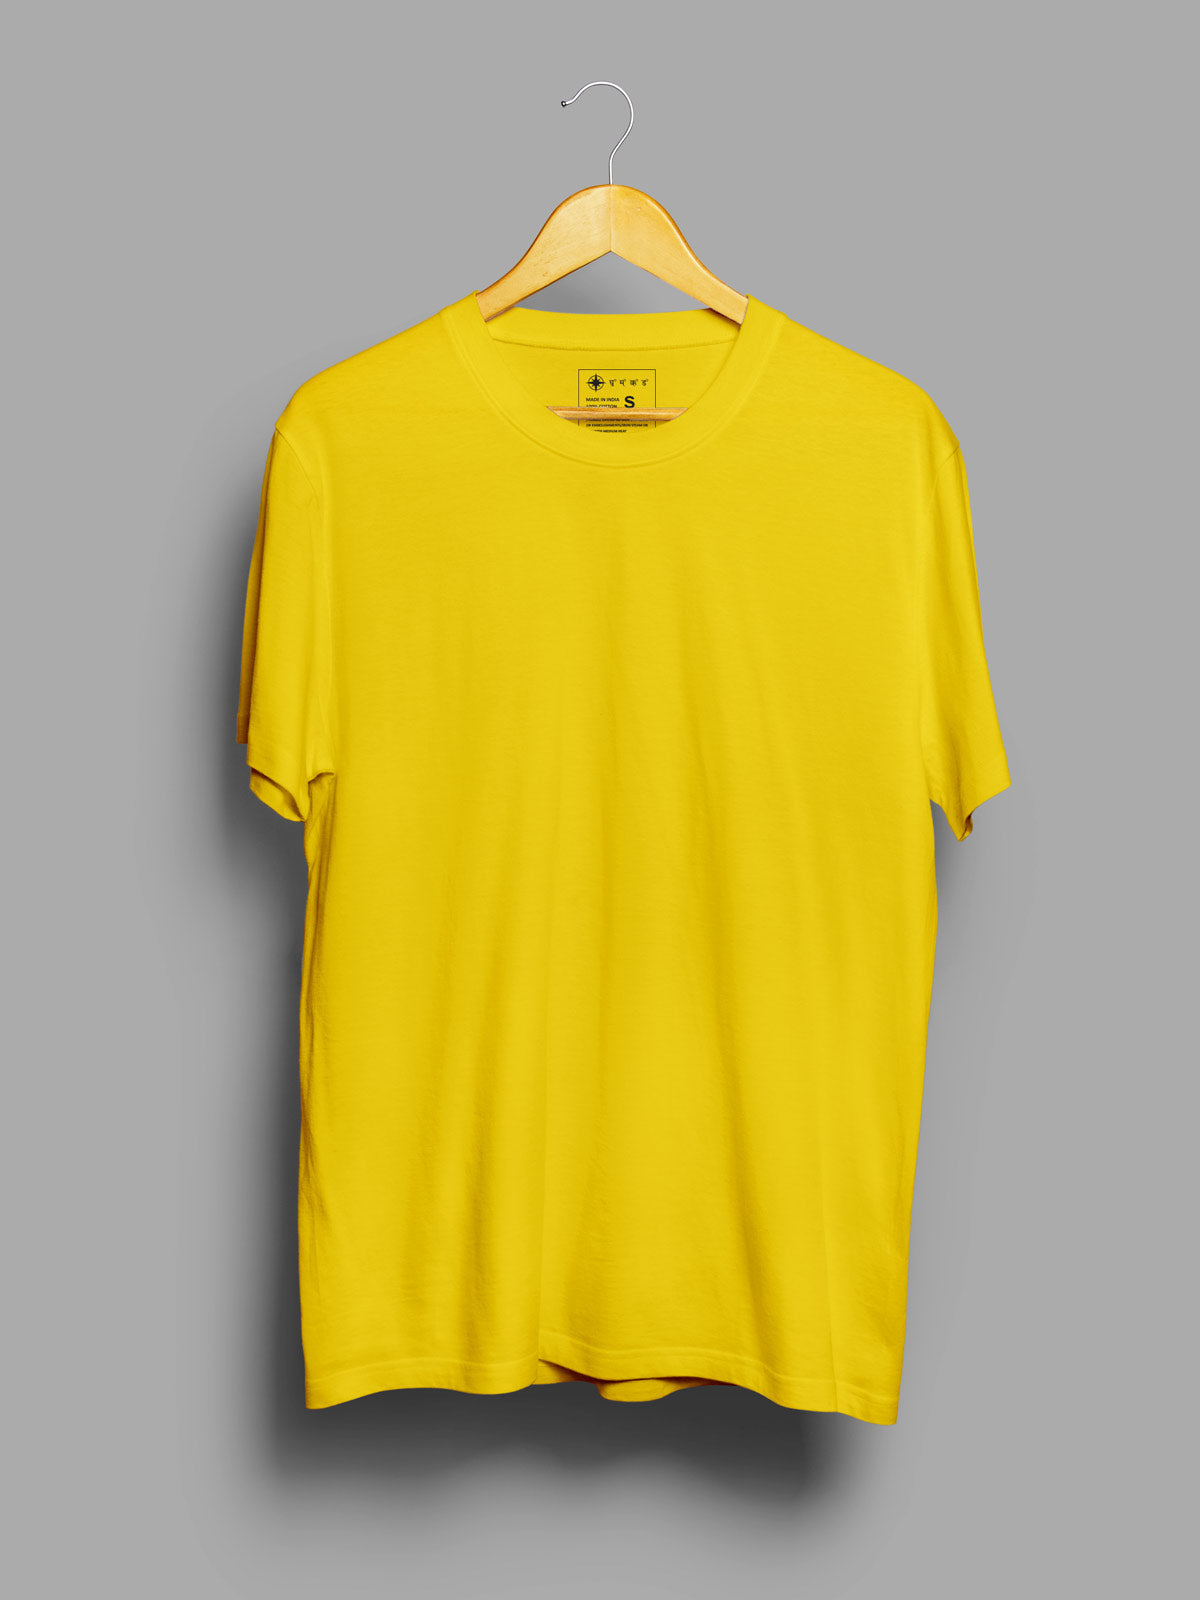  Yellow-t-shirt-for-menby Ghumakkad